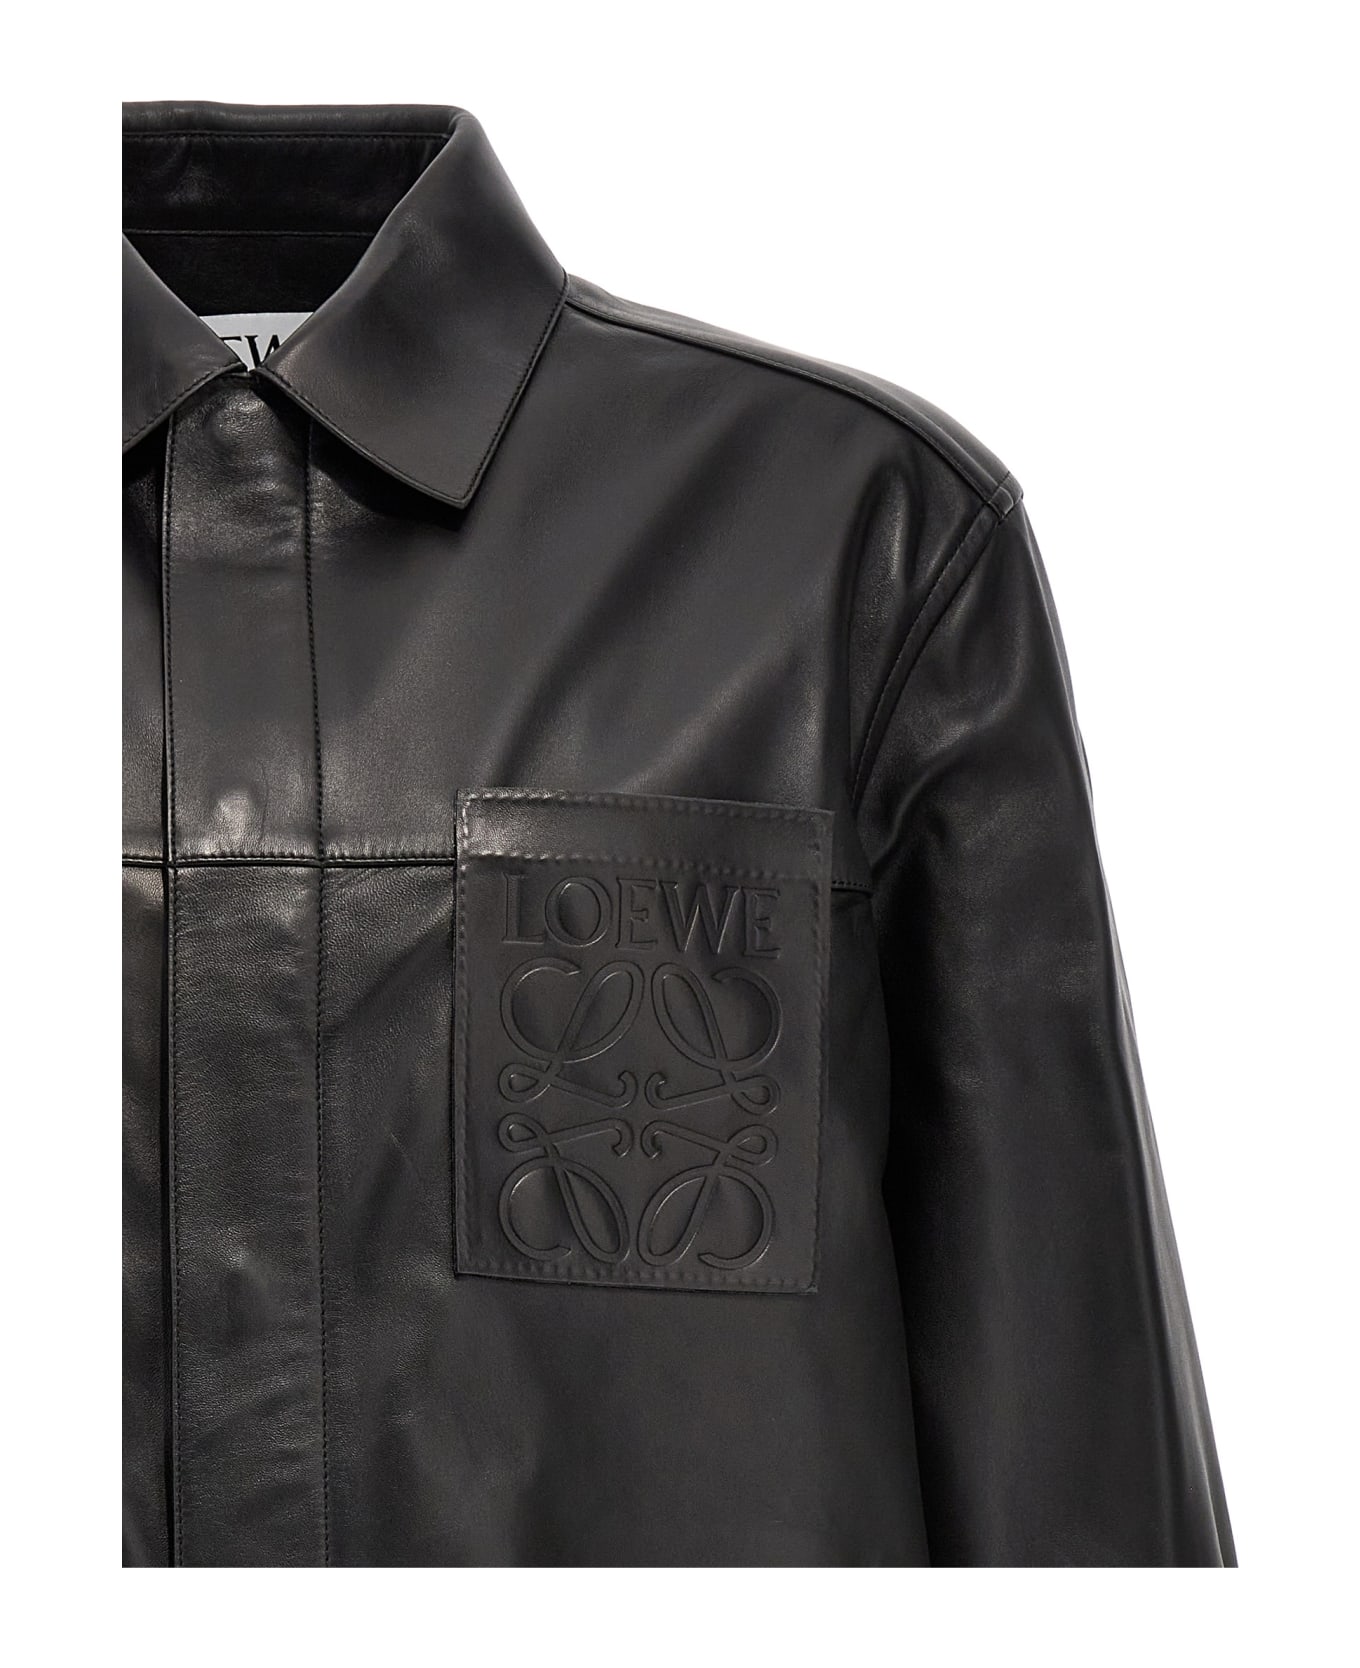 Loewe Logo Leather Jacket - Black  